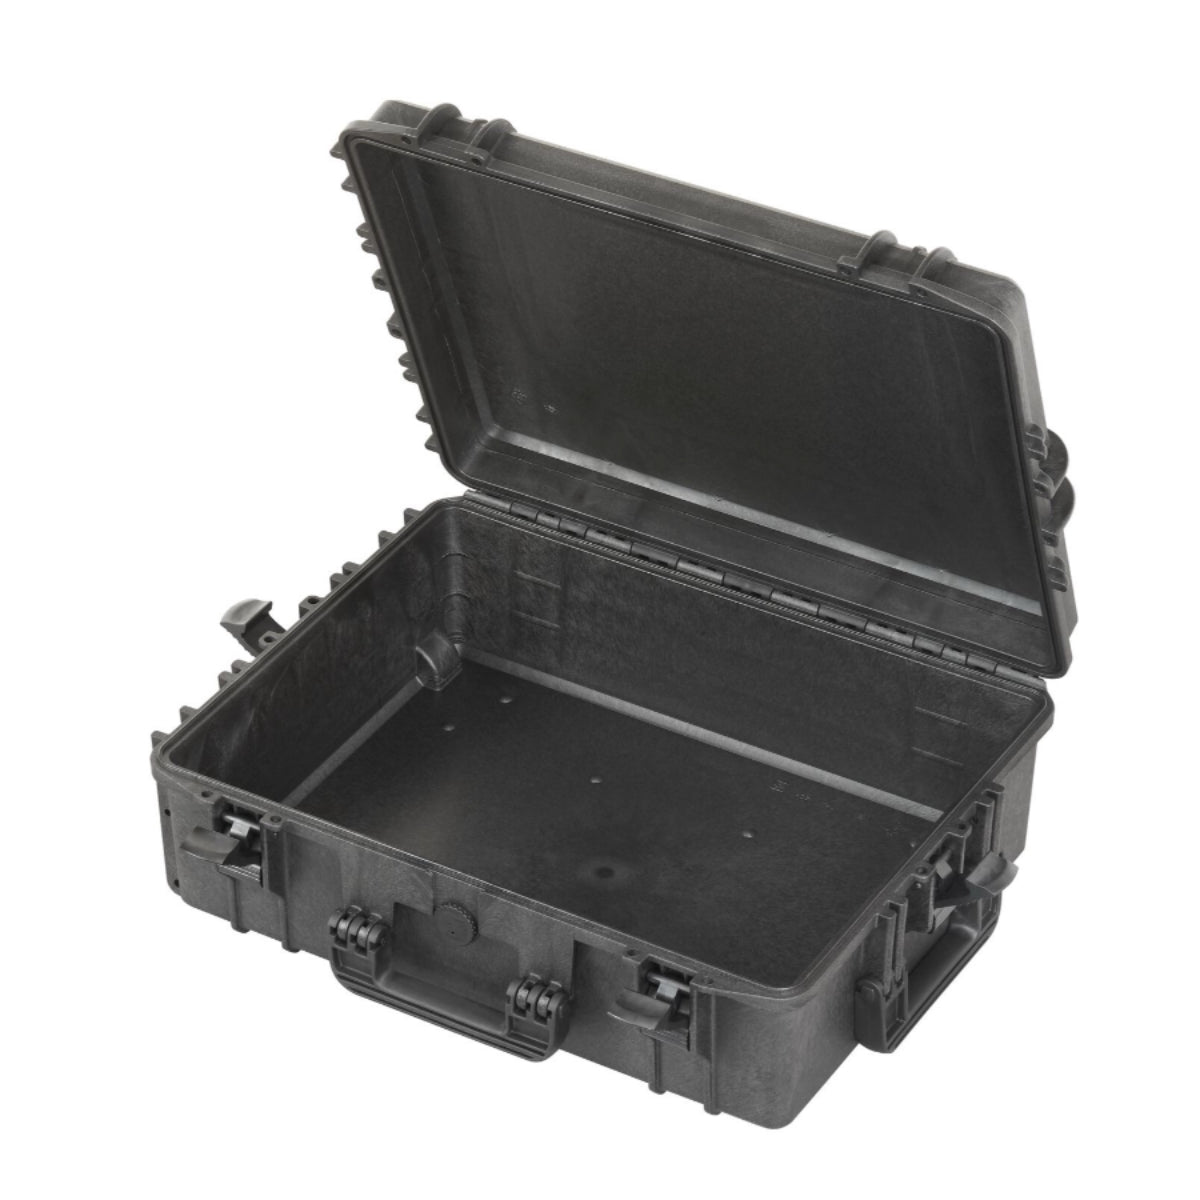 SP PRO 540H190 Black Carry Case, Empty w/ Convoluted Foam in Lid, ID: L538xW405xH190mm